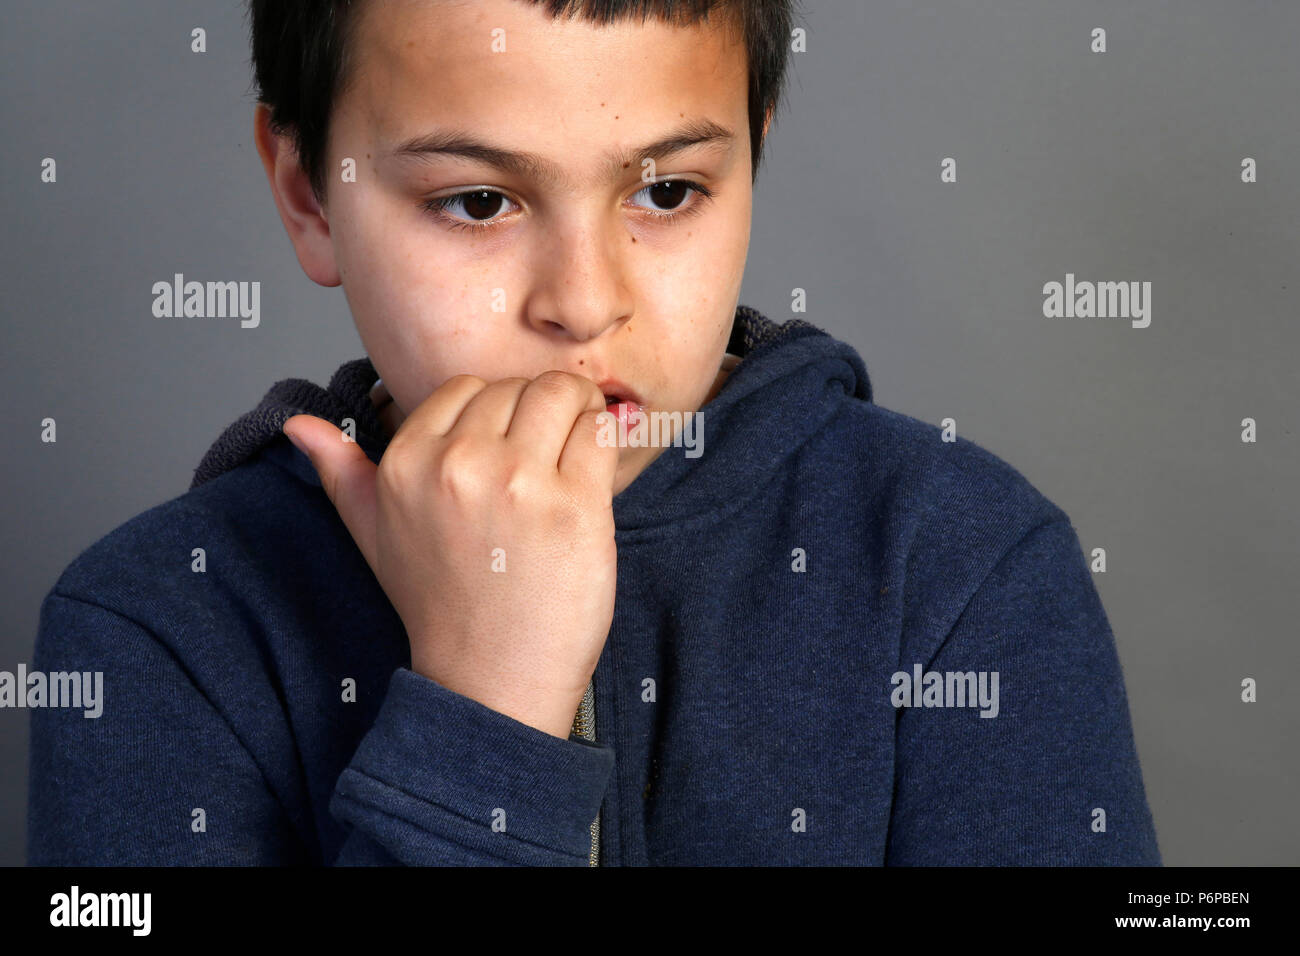 12-year-old boy biting his nails. Paris, France. Stock Photo